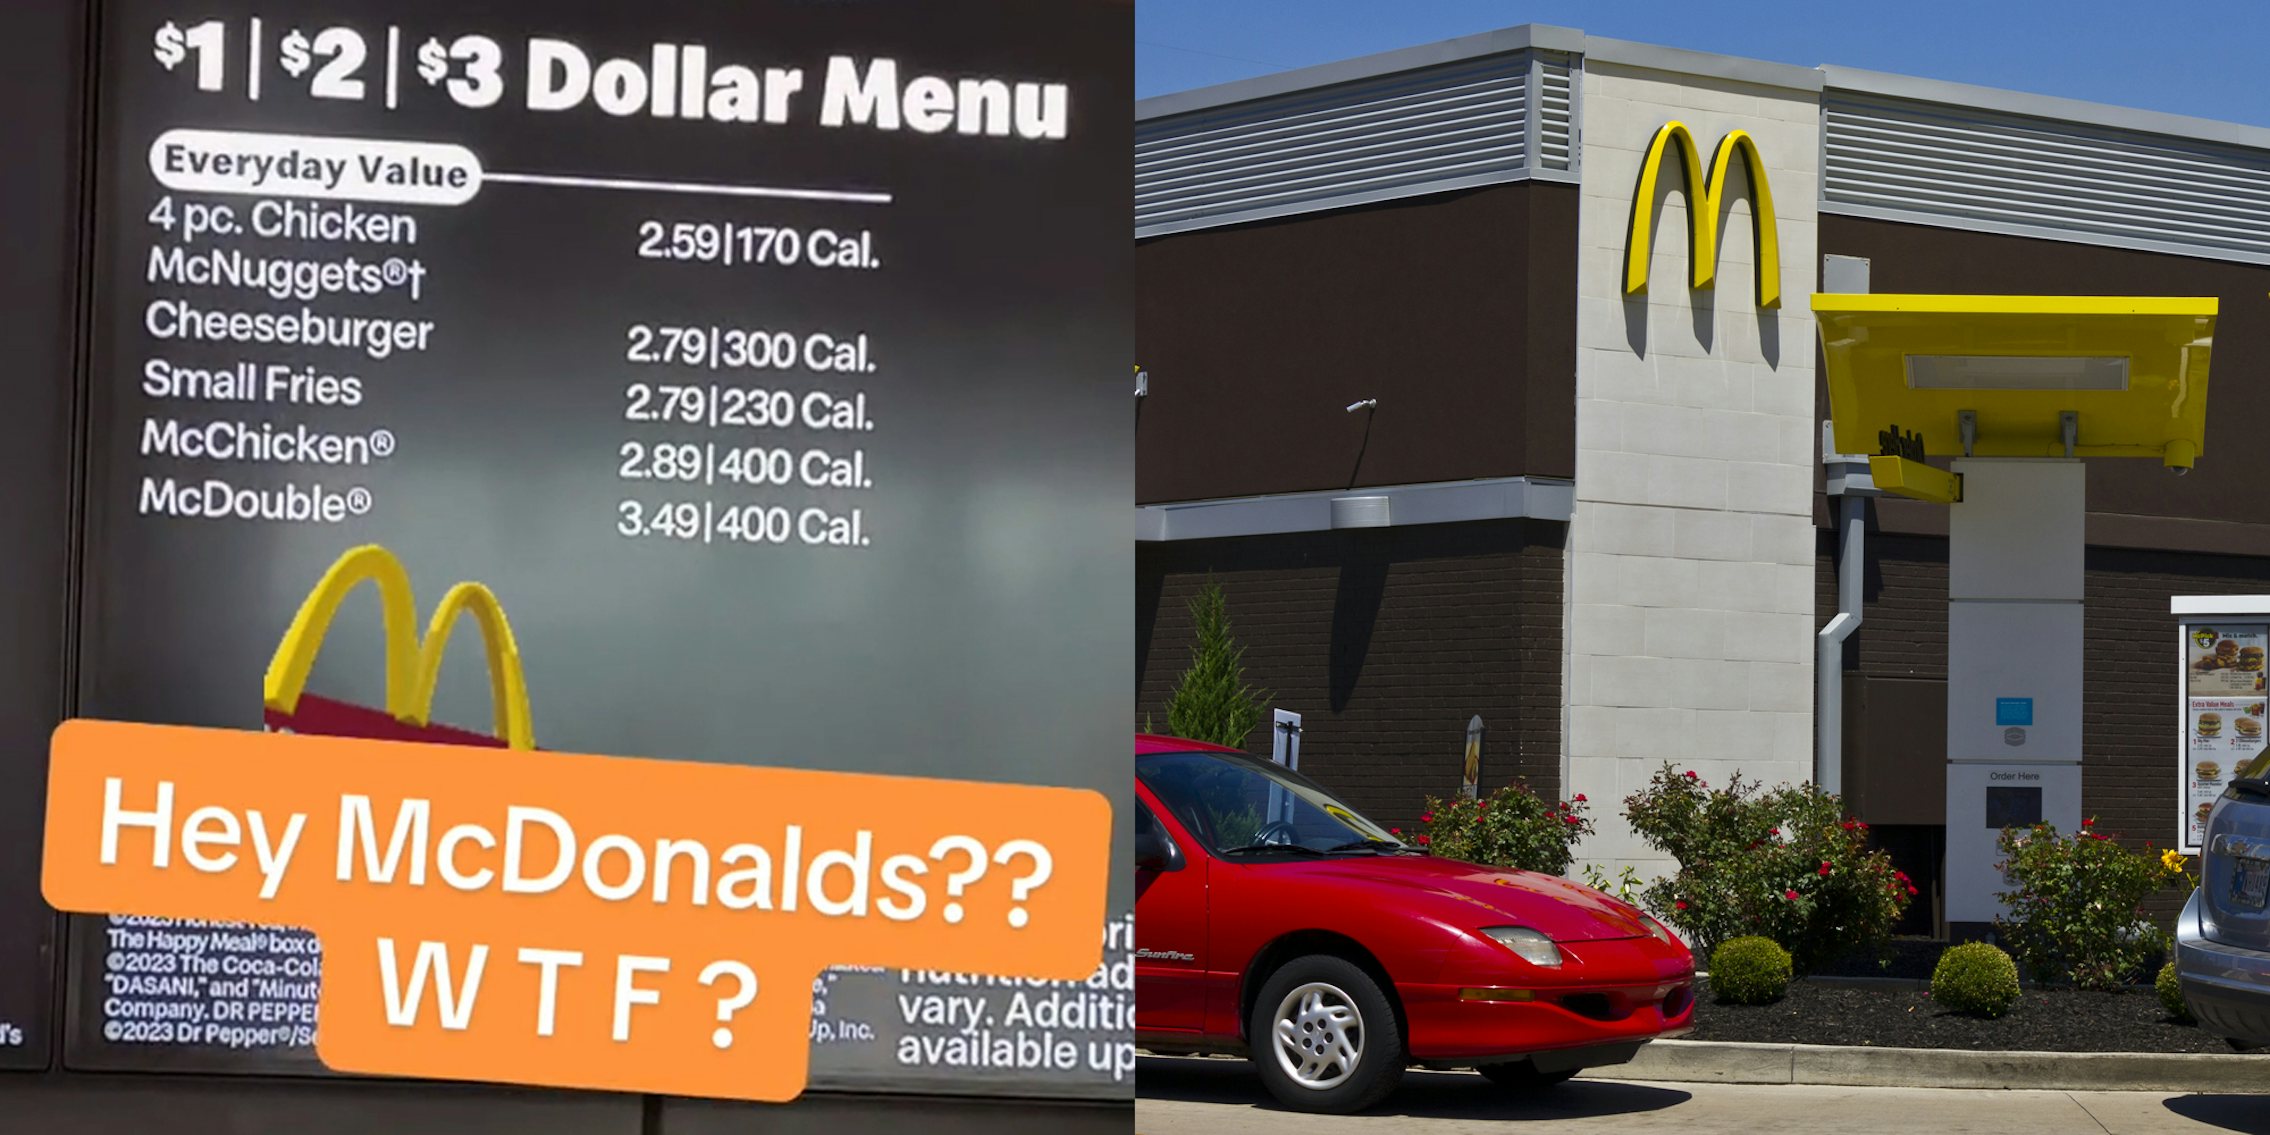 McDonald's Dollar Menu with caption 'Hey McDonalds?? W T F ?' (l) McDonald's drive thru with cars and sign (r)